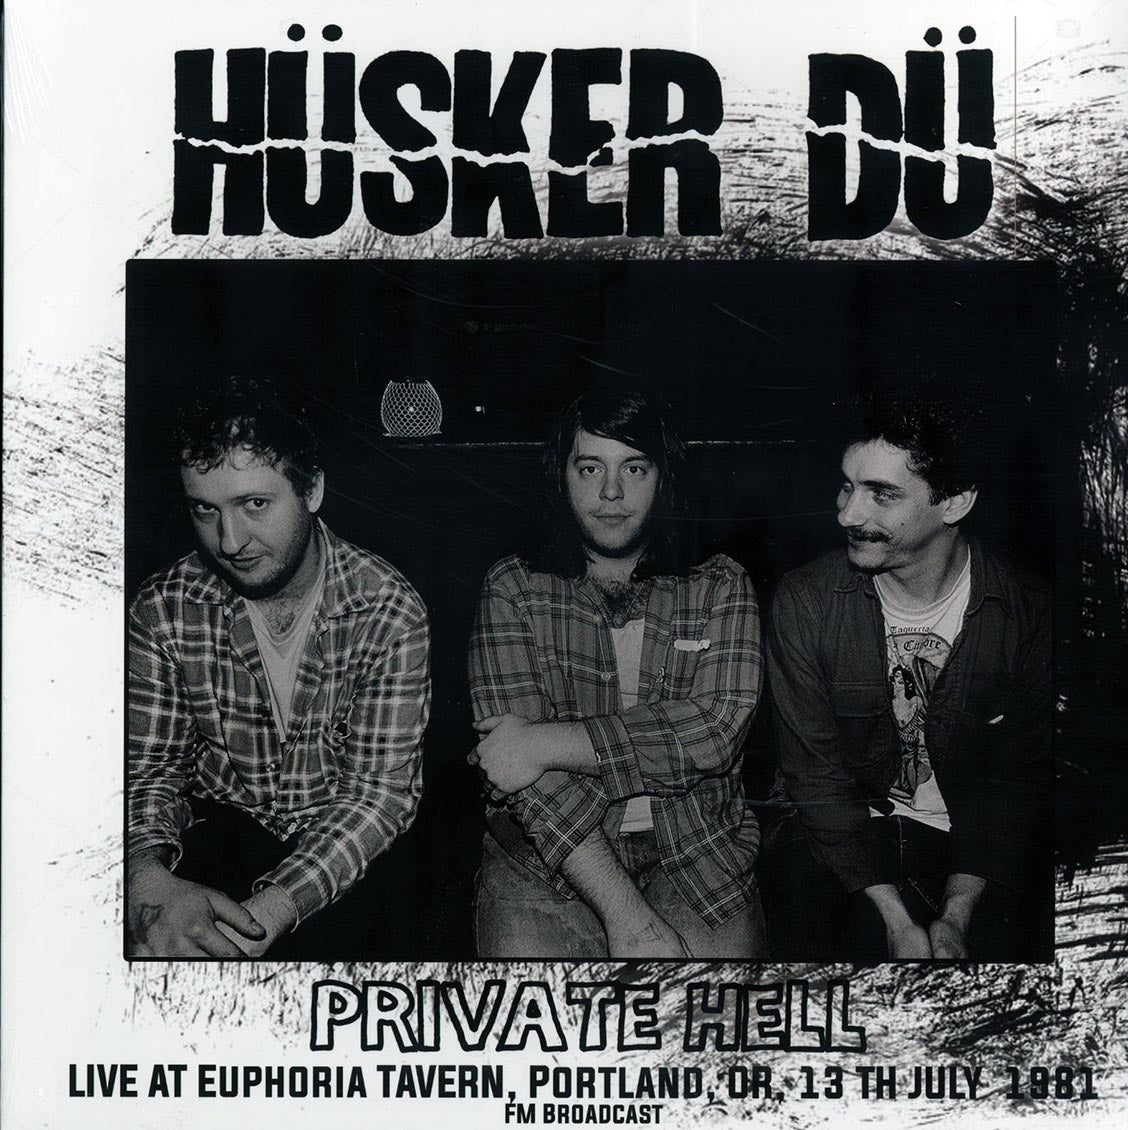 Husker Du - Private Hell: Live At Euphoria Tavern, Portland, OR 13th July 1981 FM Broadcast (ltd. 500 copies made) - Vinyl LP